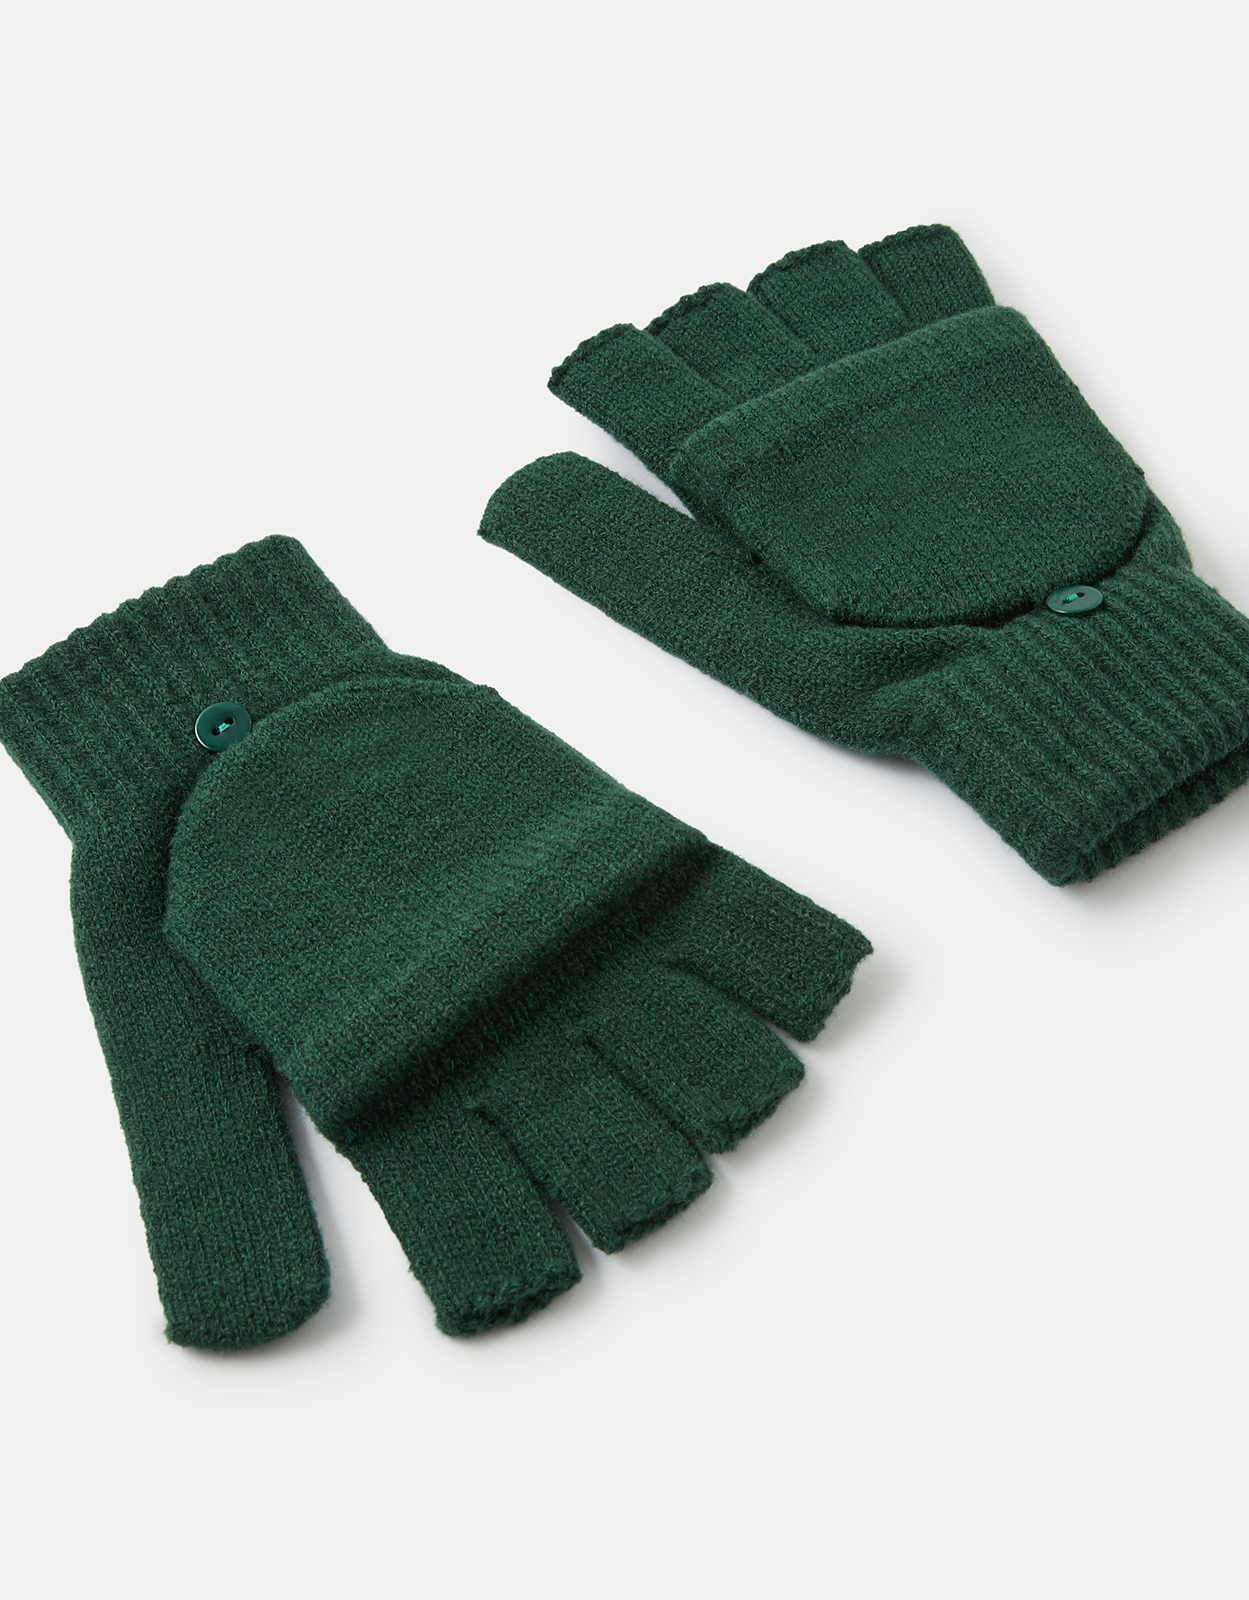 Accessorize Plain Capped Gloves